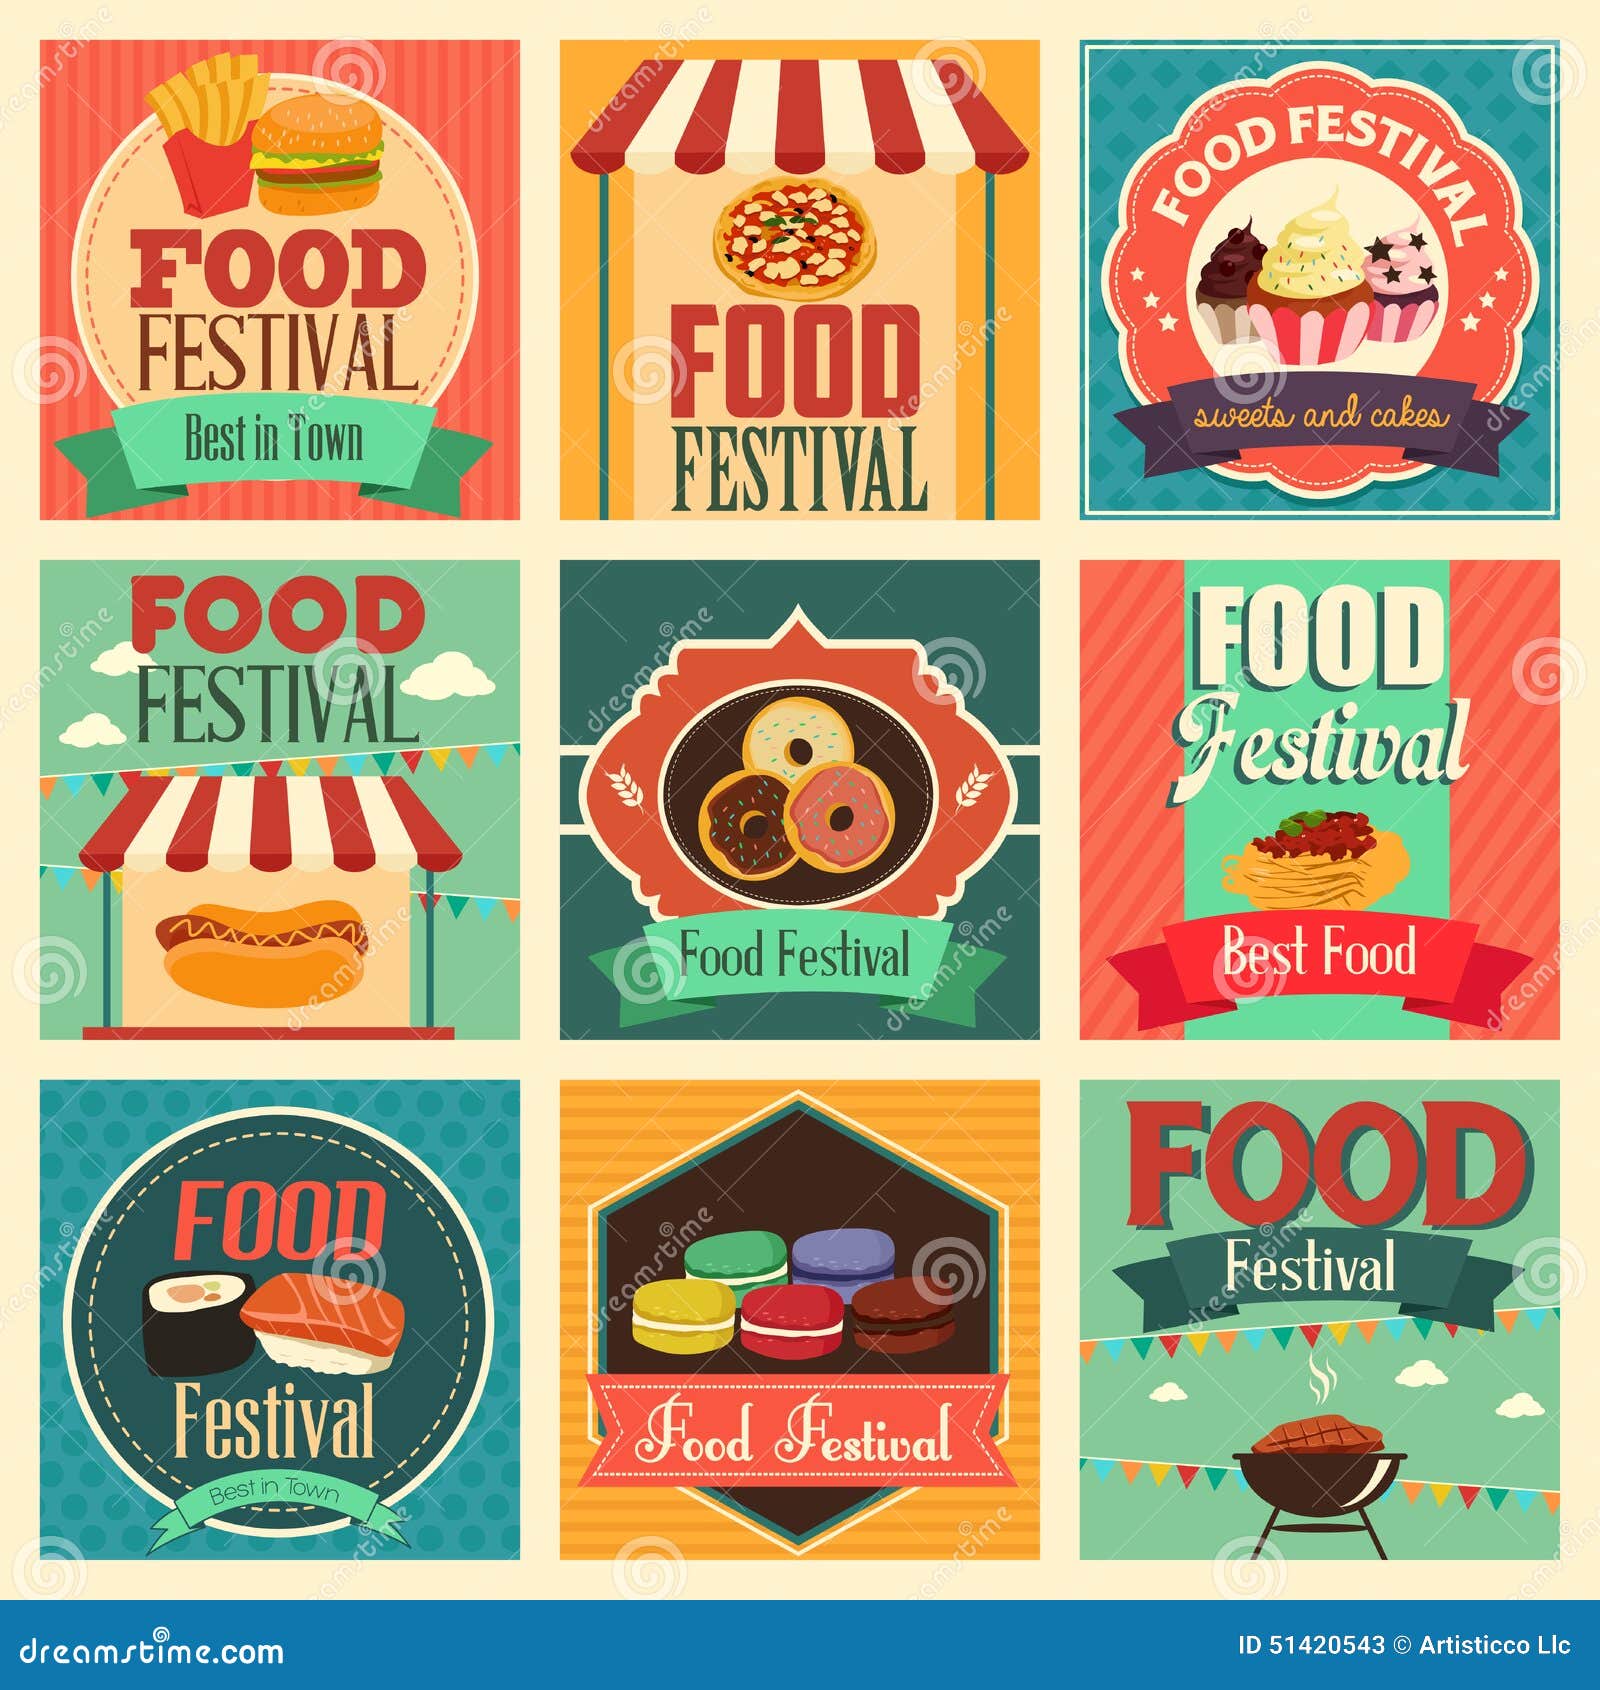 Food Festival Icons Stock Vector Illustration Of Festive 51420543